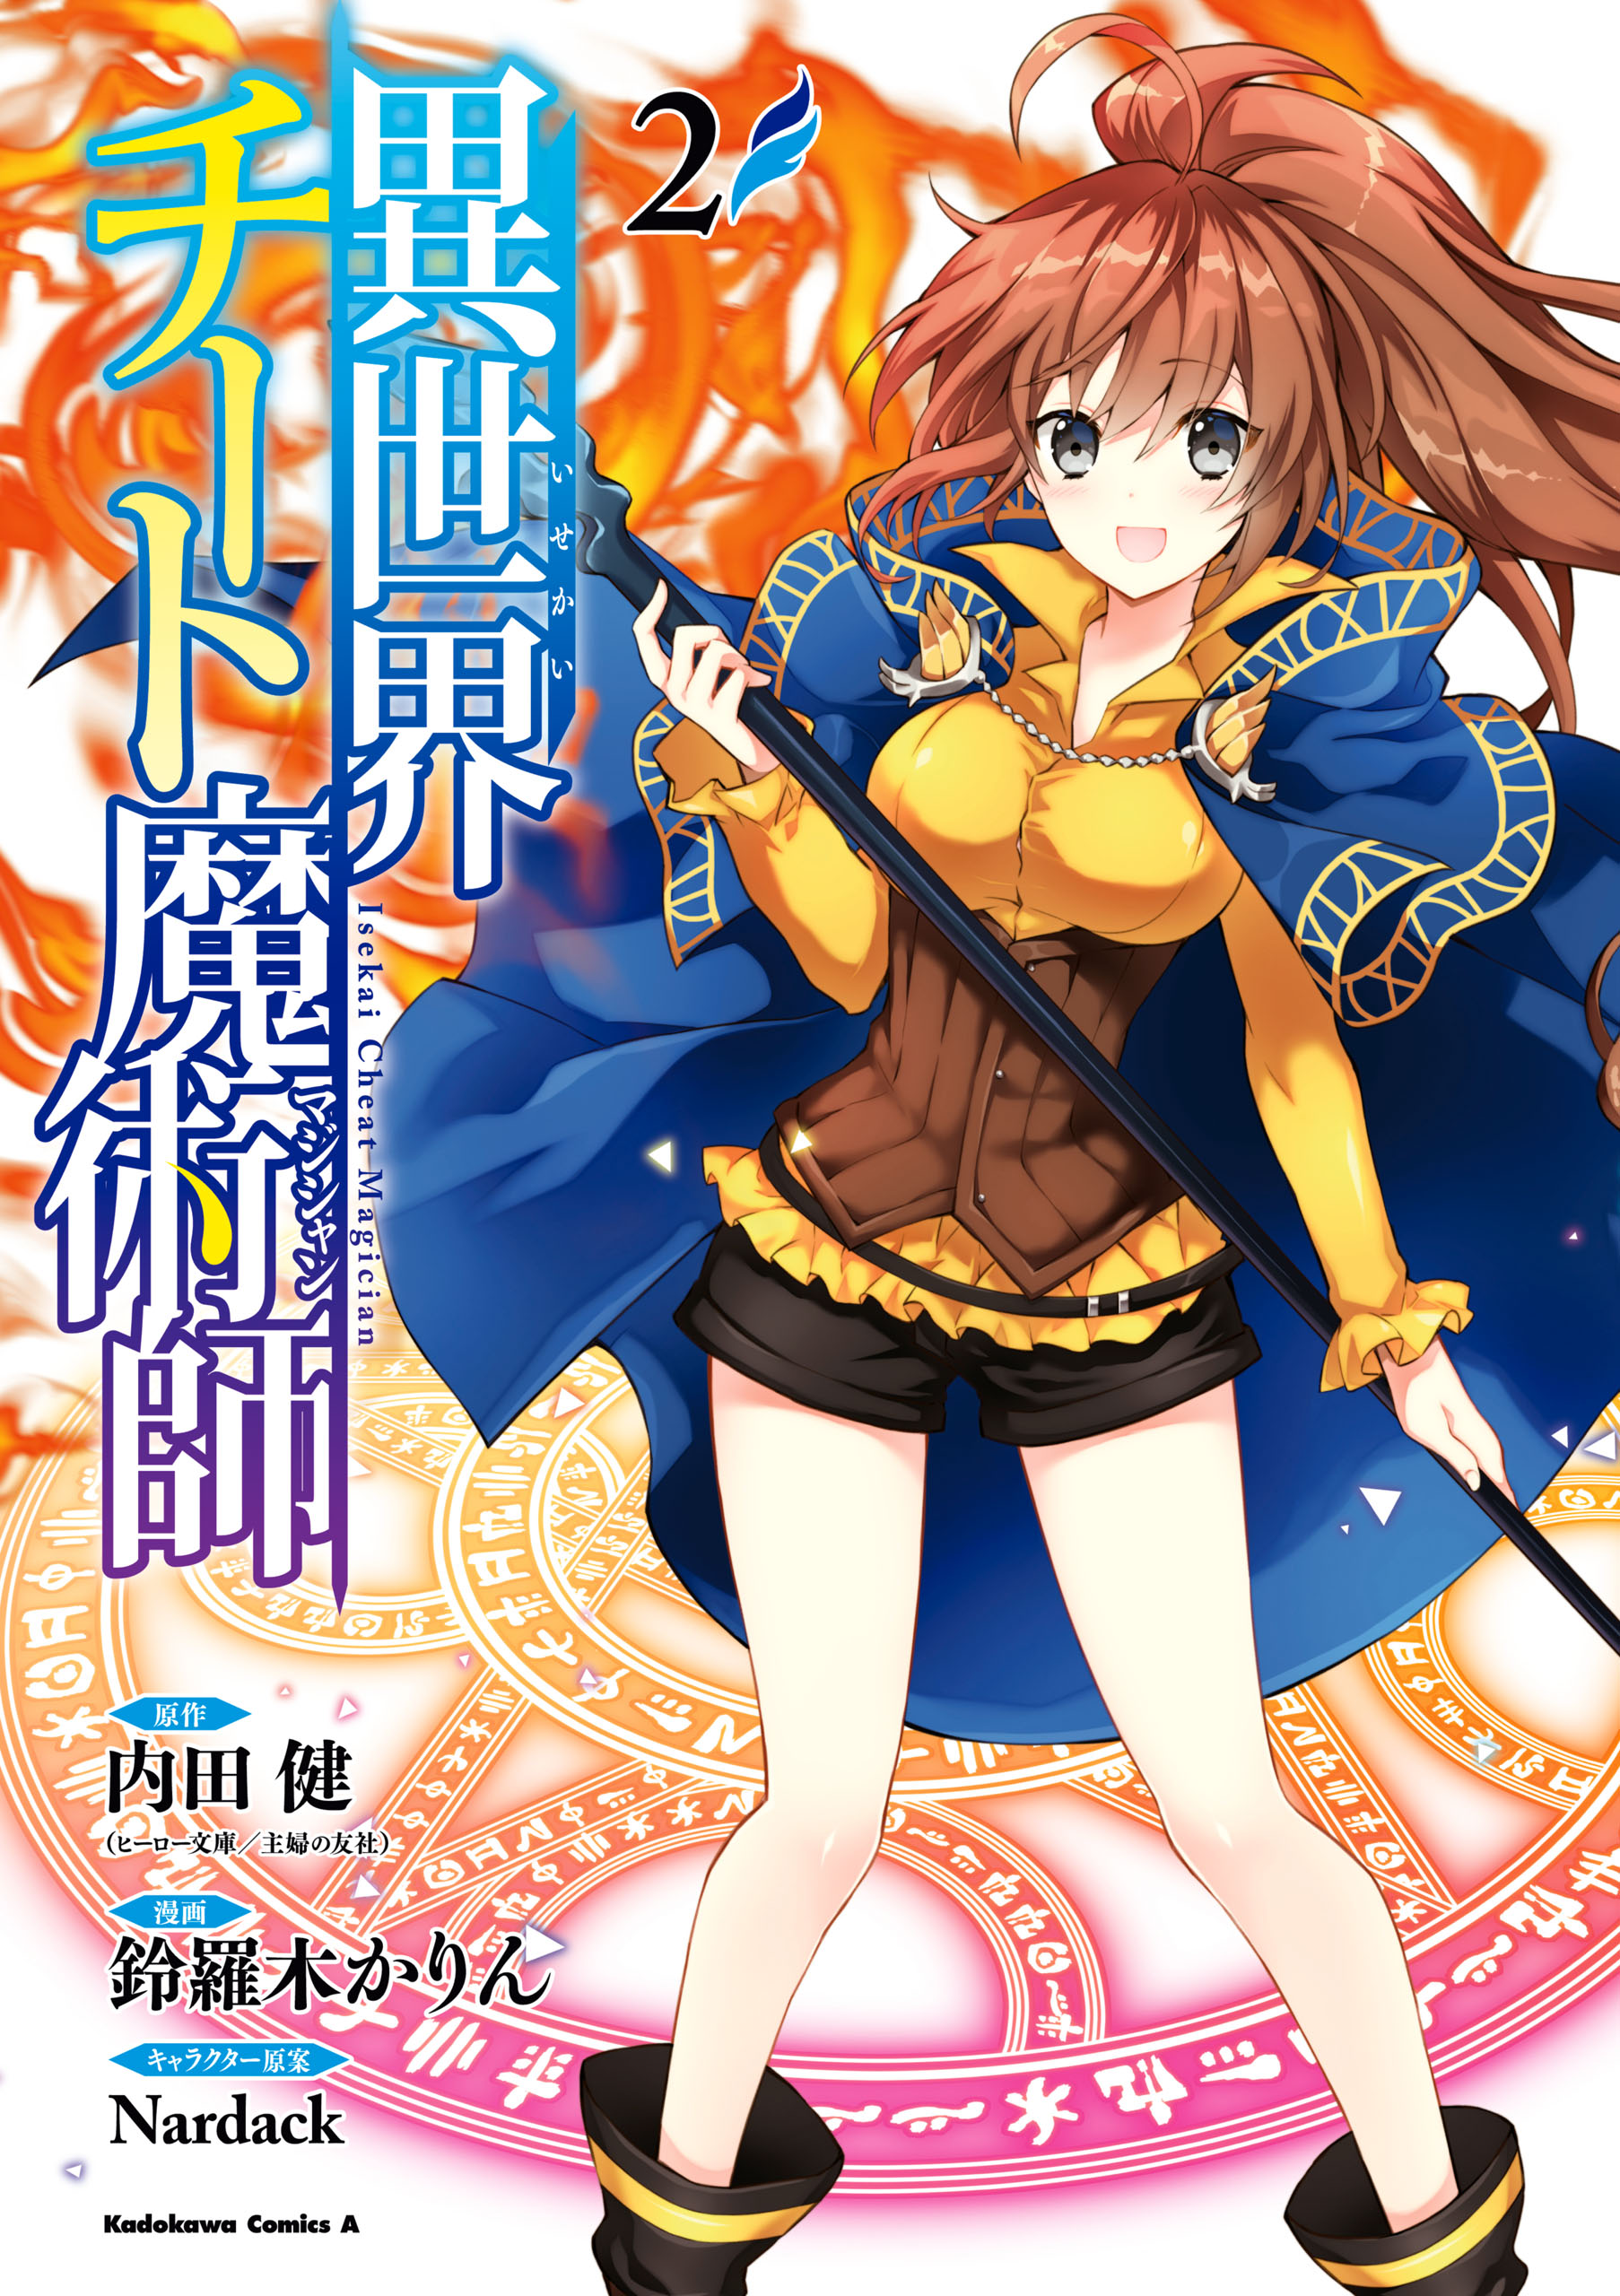 YESASIA: Isekai Cheat Magician Vol.2 (Blu-ray) (Japan Version) Blu-ray -  Tanaka Minami, Fujisawa Yoshiaki - Anime in Japanese - Free Shipping -  North America Site